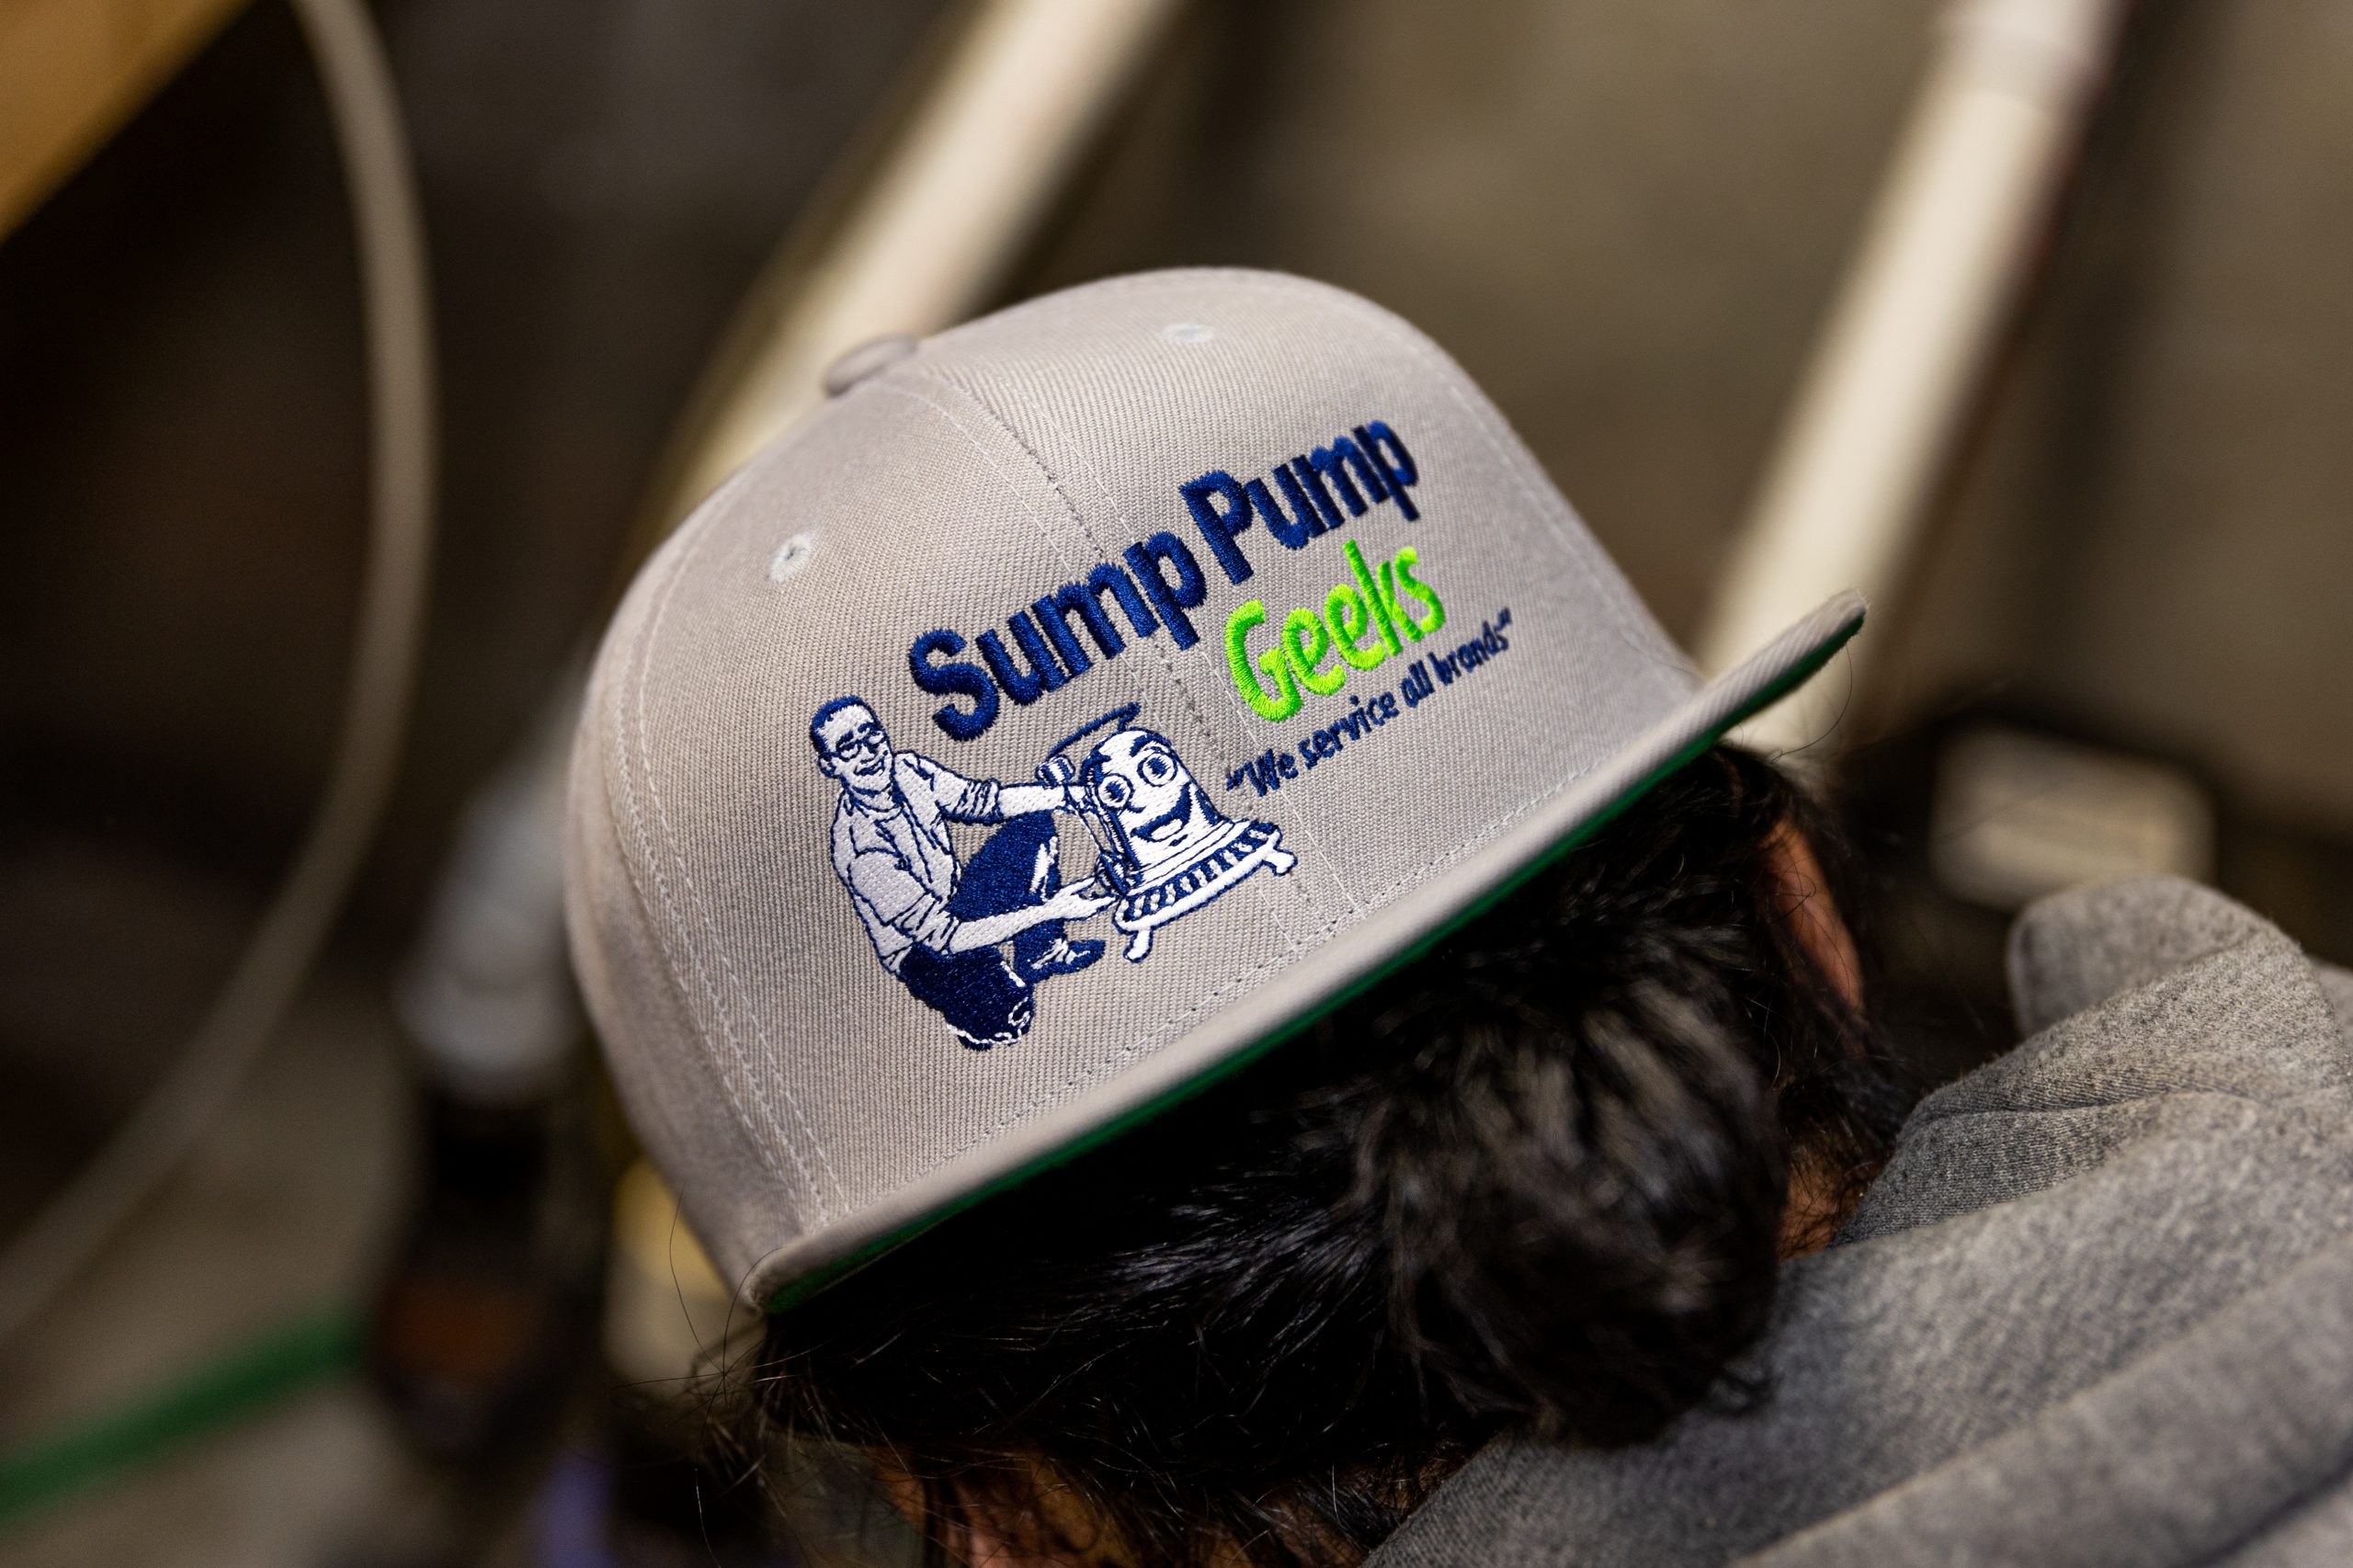 Sump Pump Geeks service